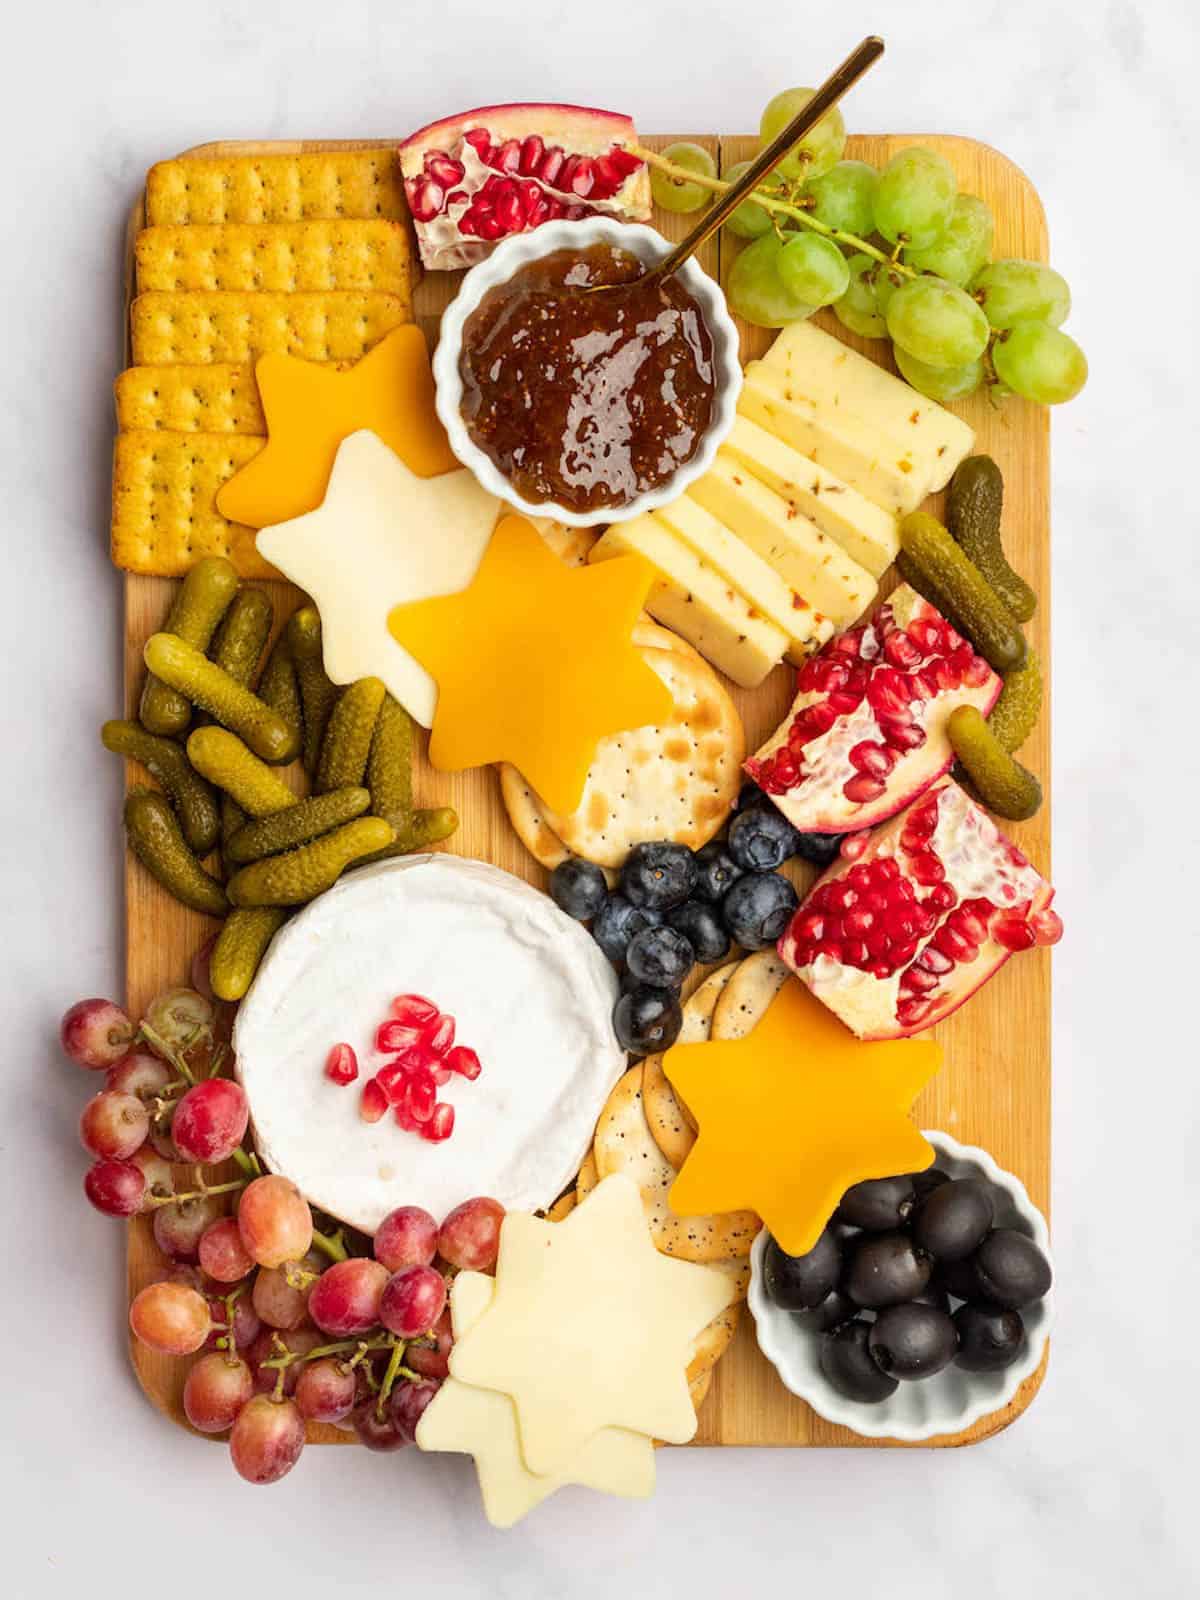 Star of David hanukah themed cheese board.